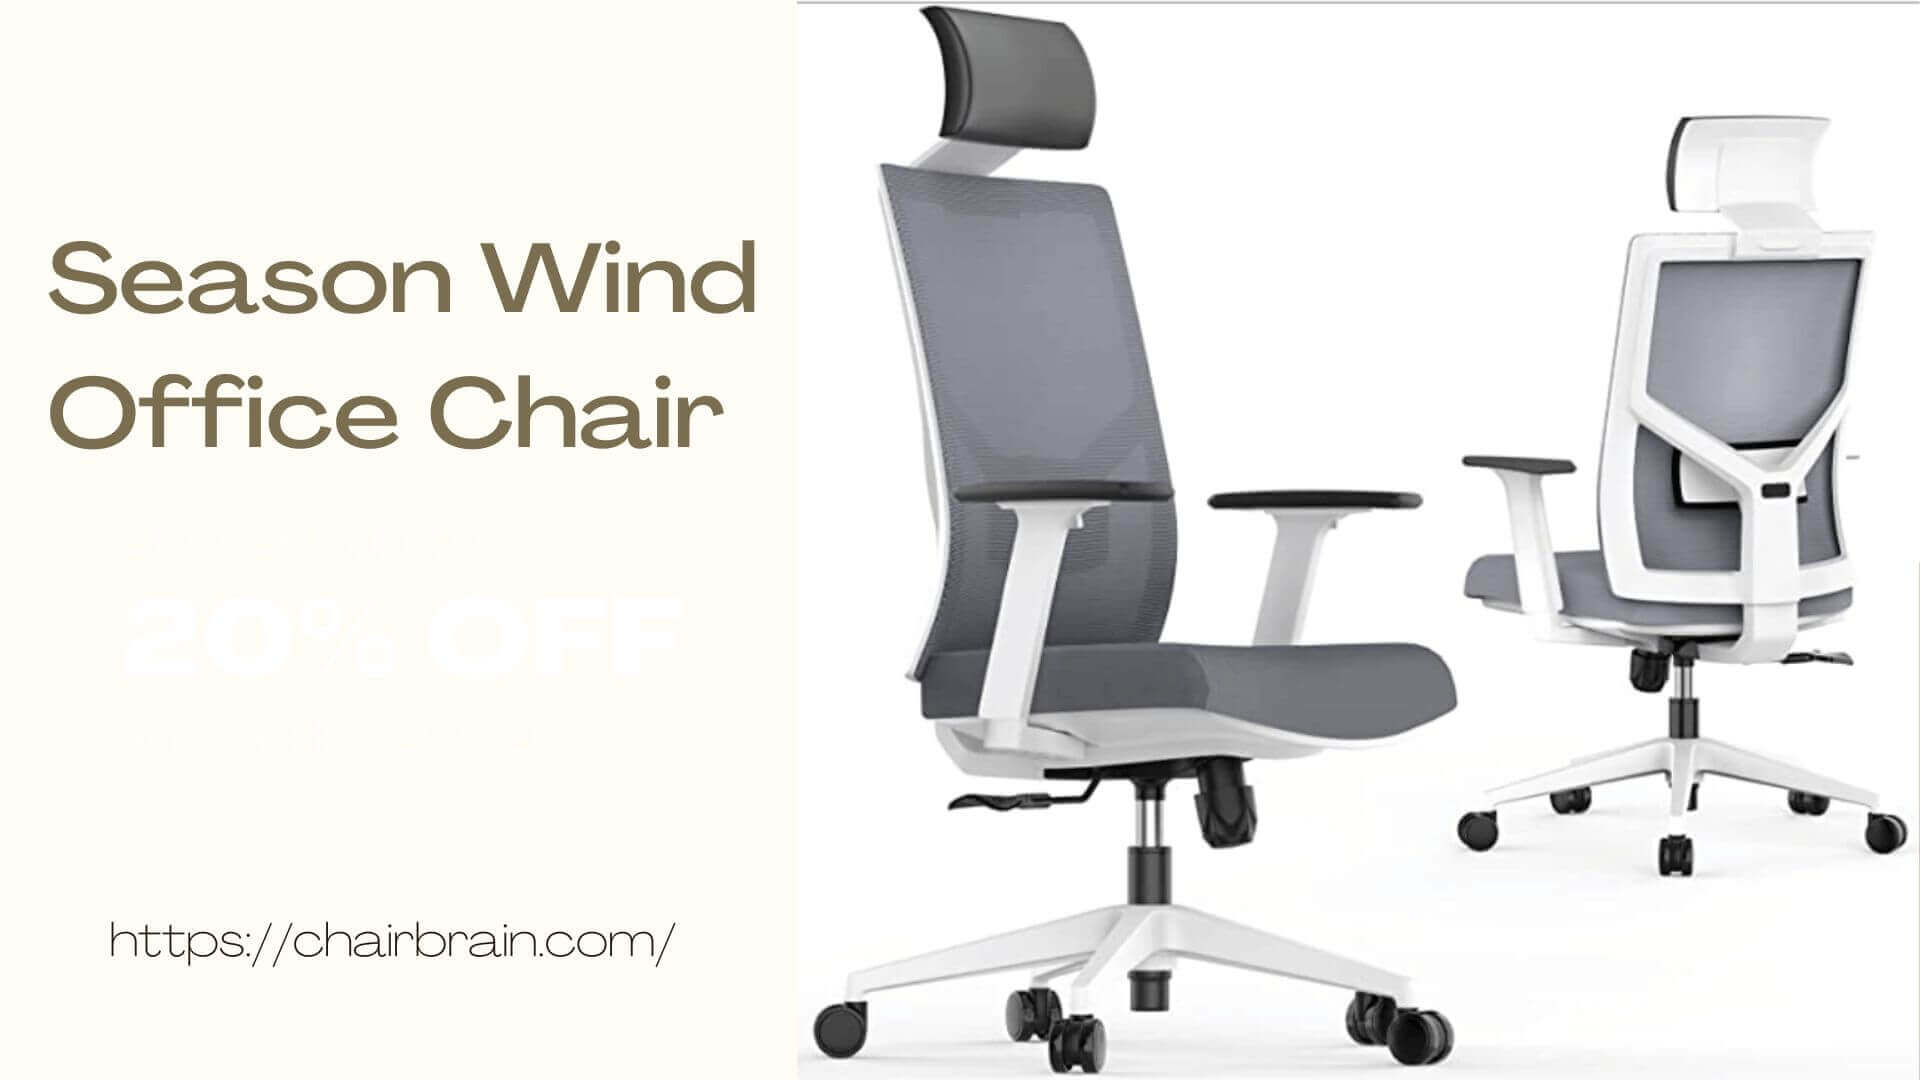 Season wind Office Chair